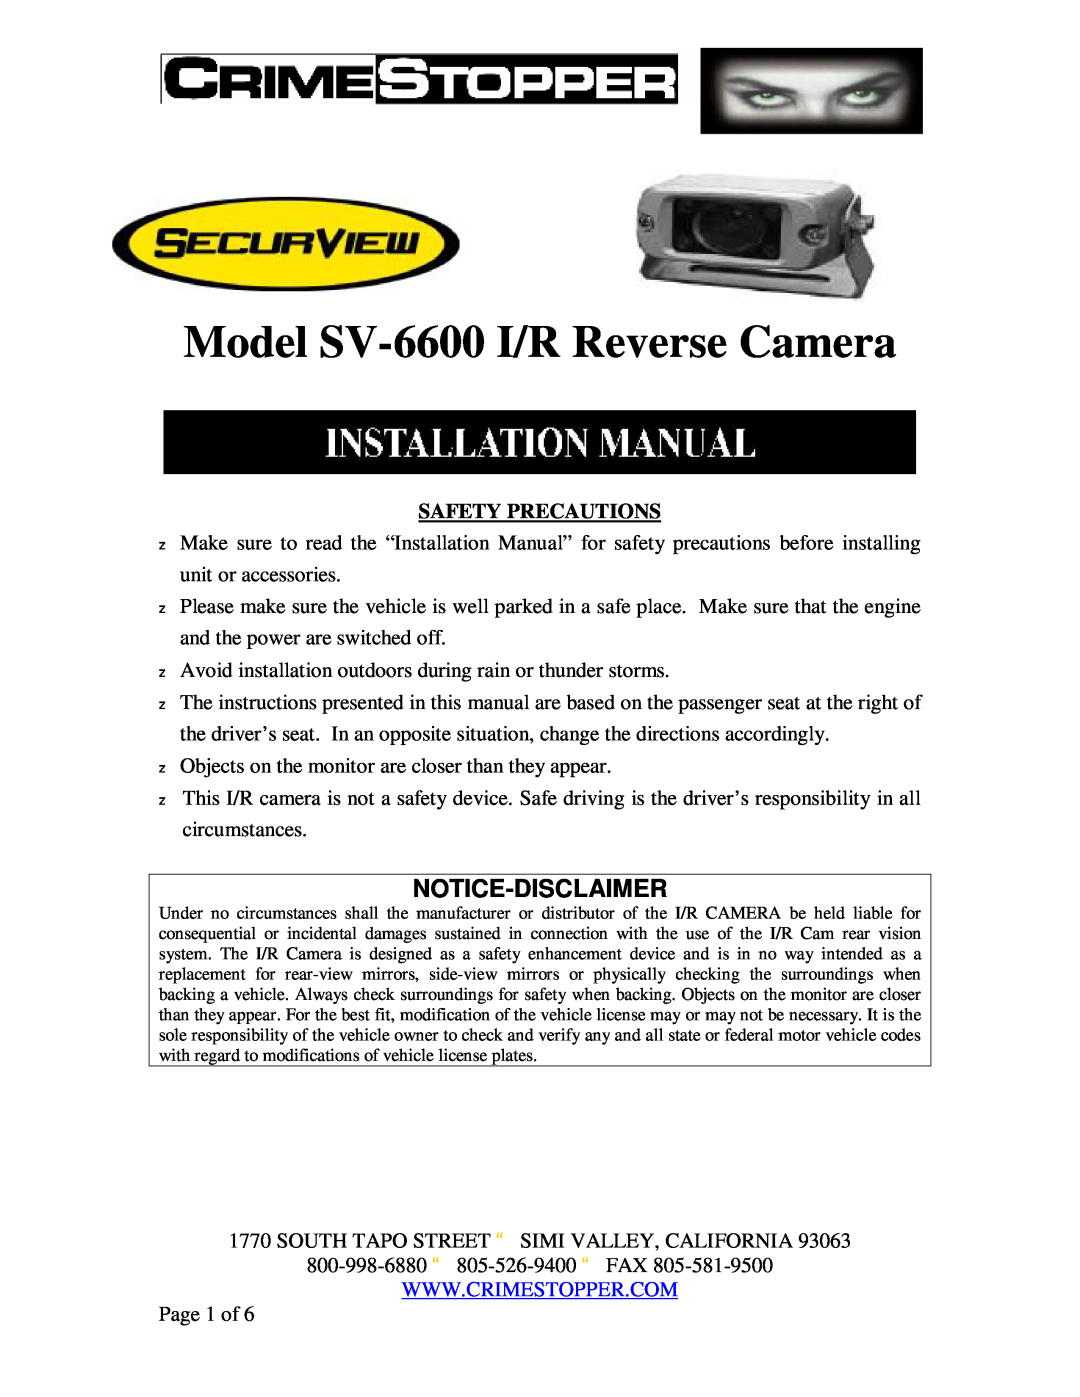 Crimestopper Security Products SV-6600 I/R installation manual Model SV-6600I/R Reverse Camera, Notice-Disclaimer 